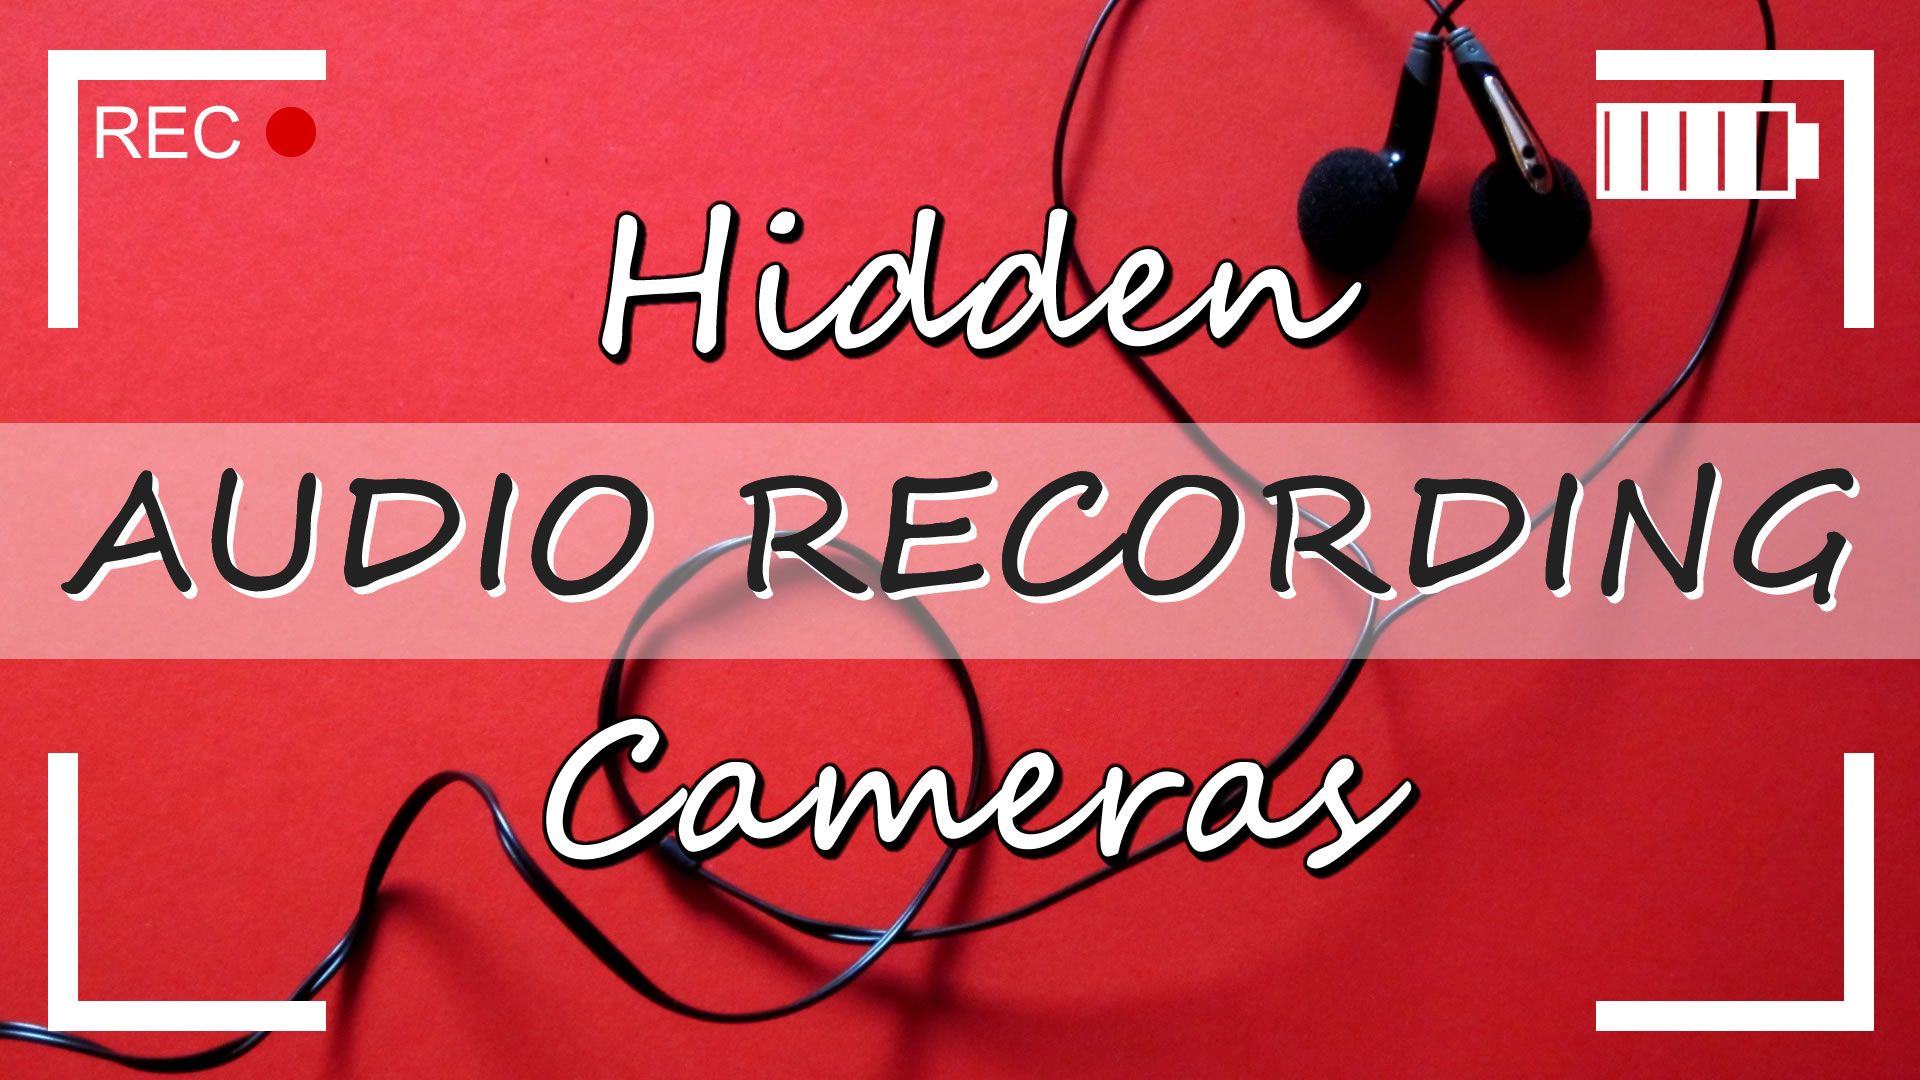 spy cameras with audio recording